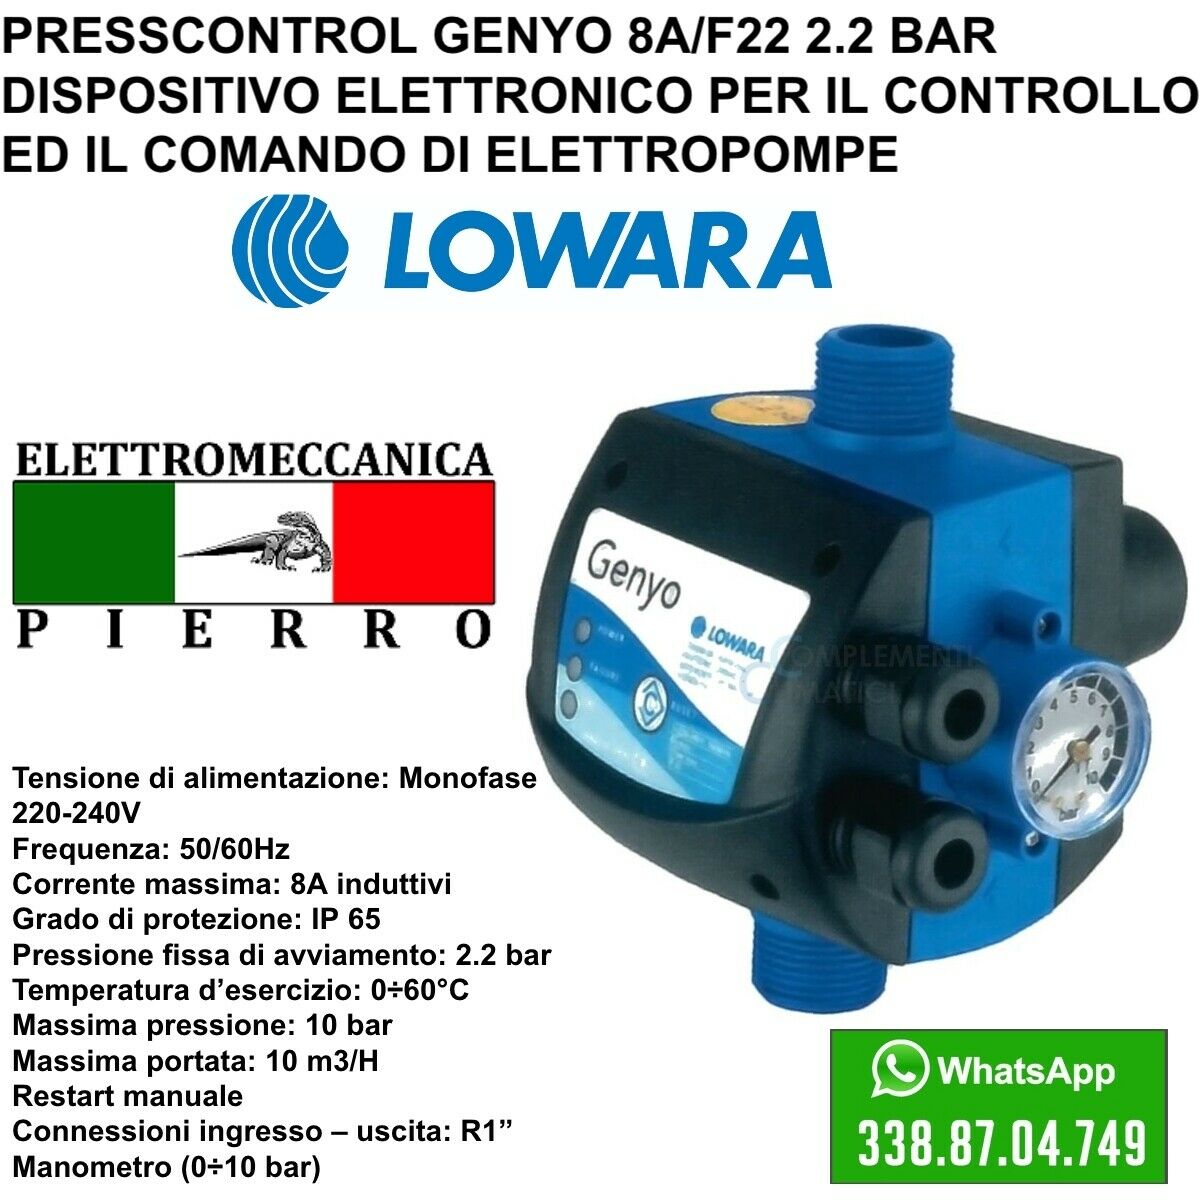 Presscontrol GENYO 8A/F22 LOWARA logo LOWARA Elettromeccanica Pierro Assistenza